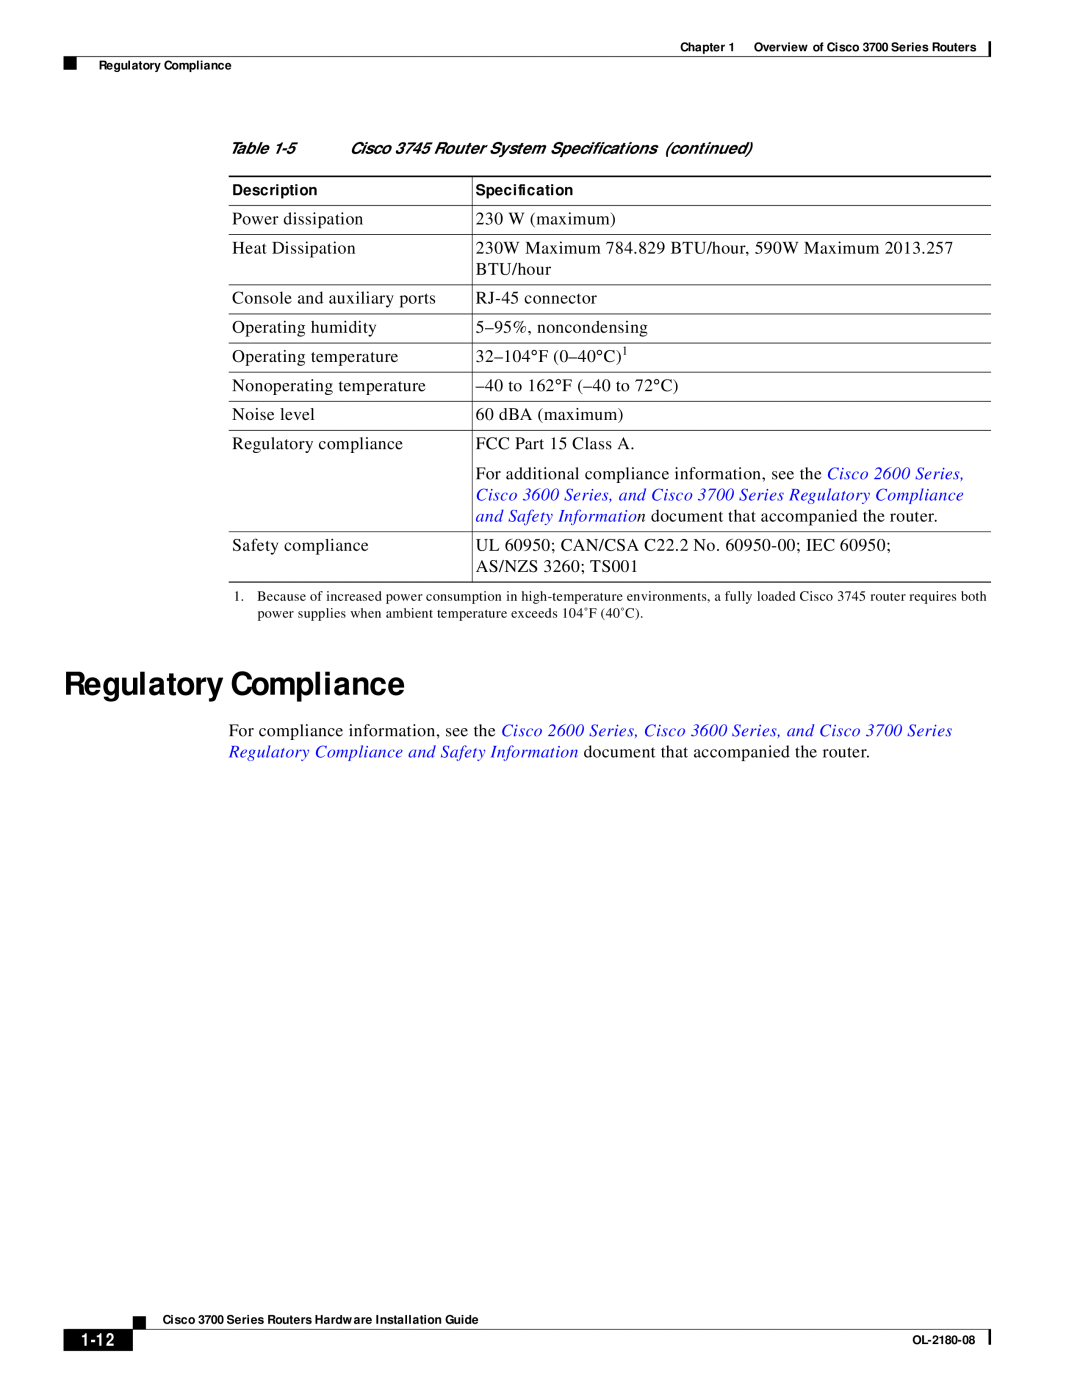 Cisco Systems 3700 specifications Regulatory Compliance, 1-12, Description, Specification 